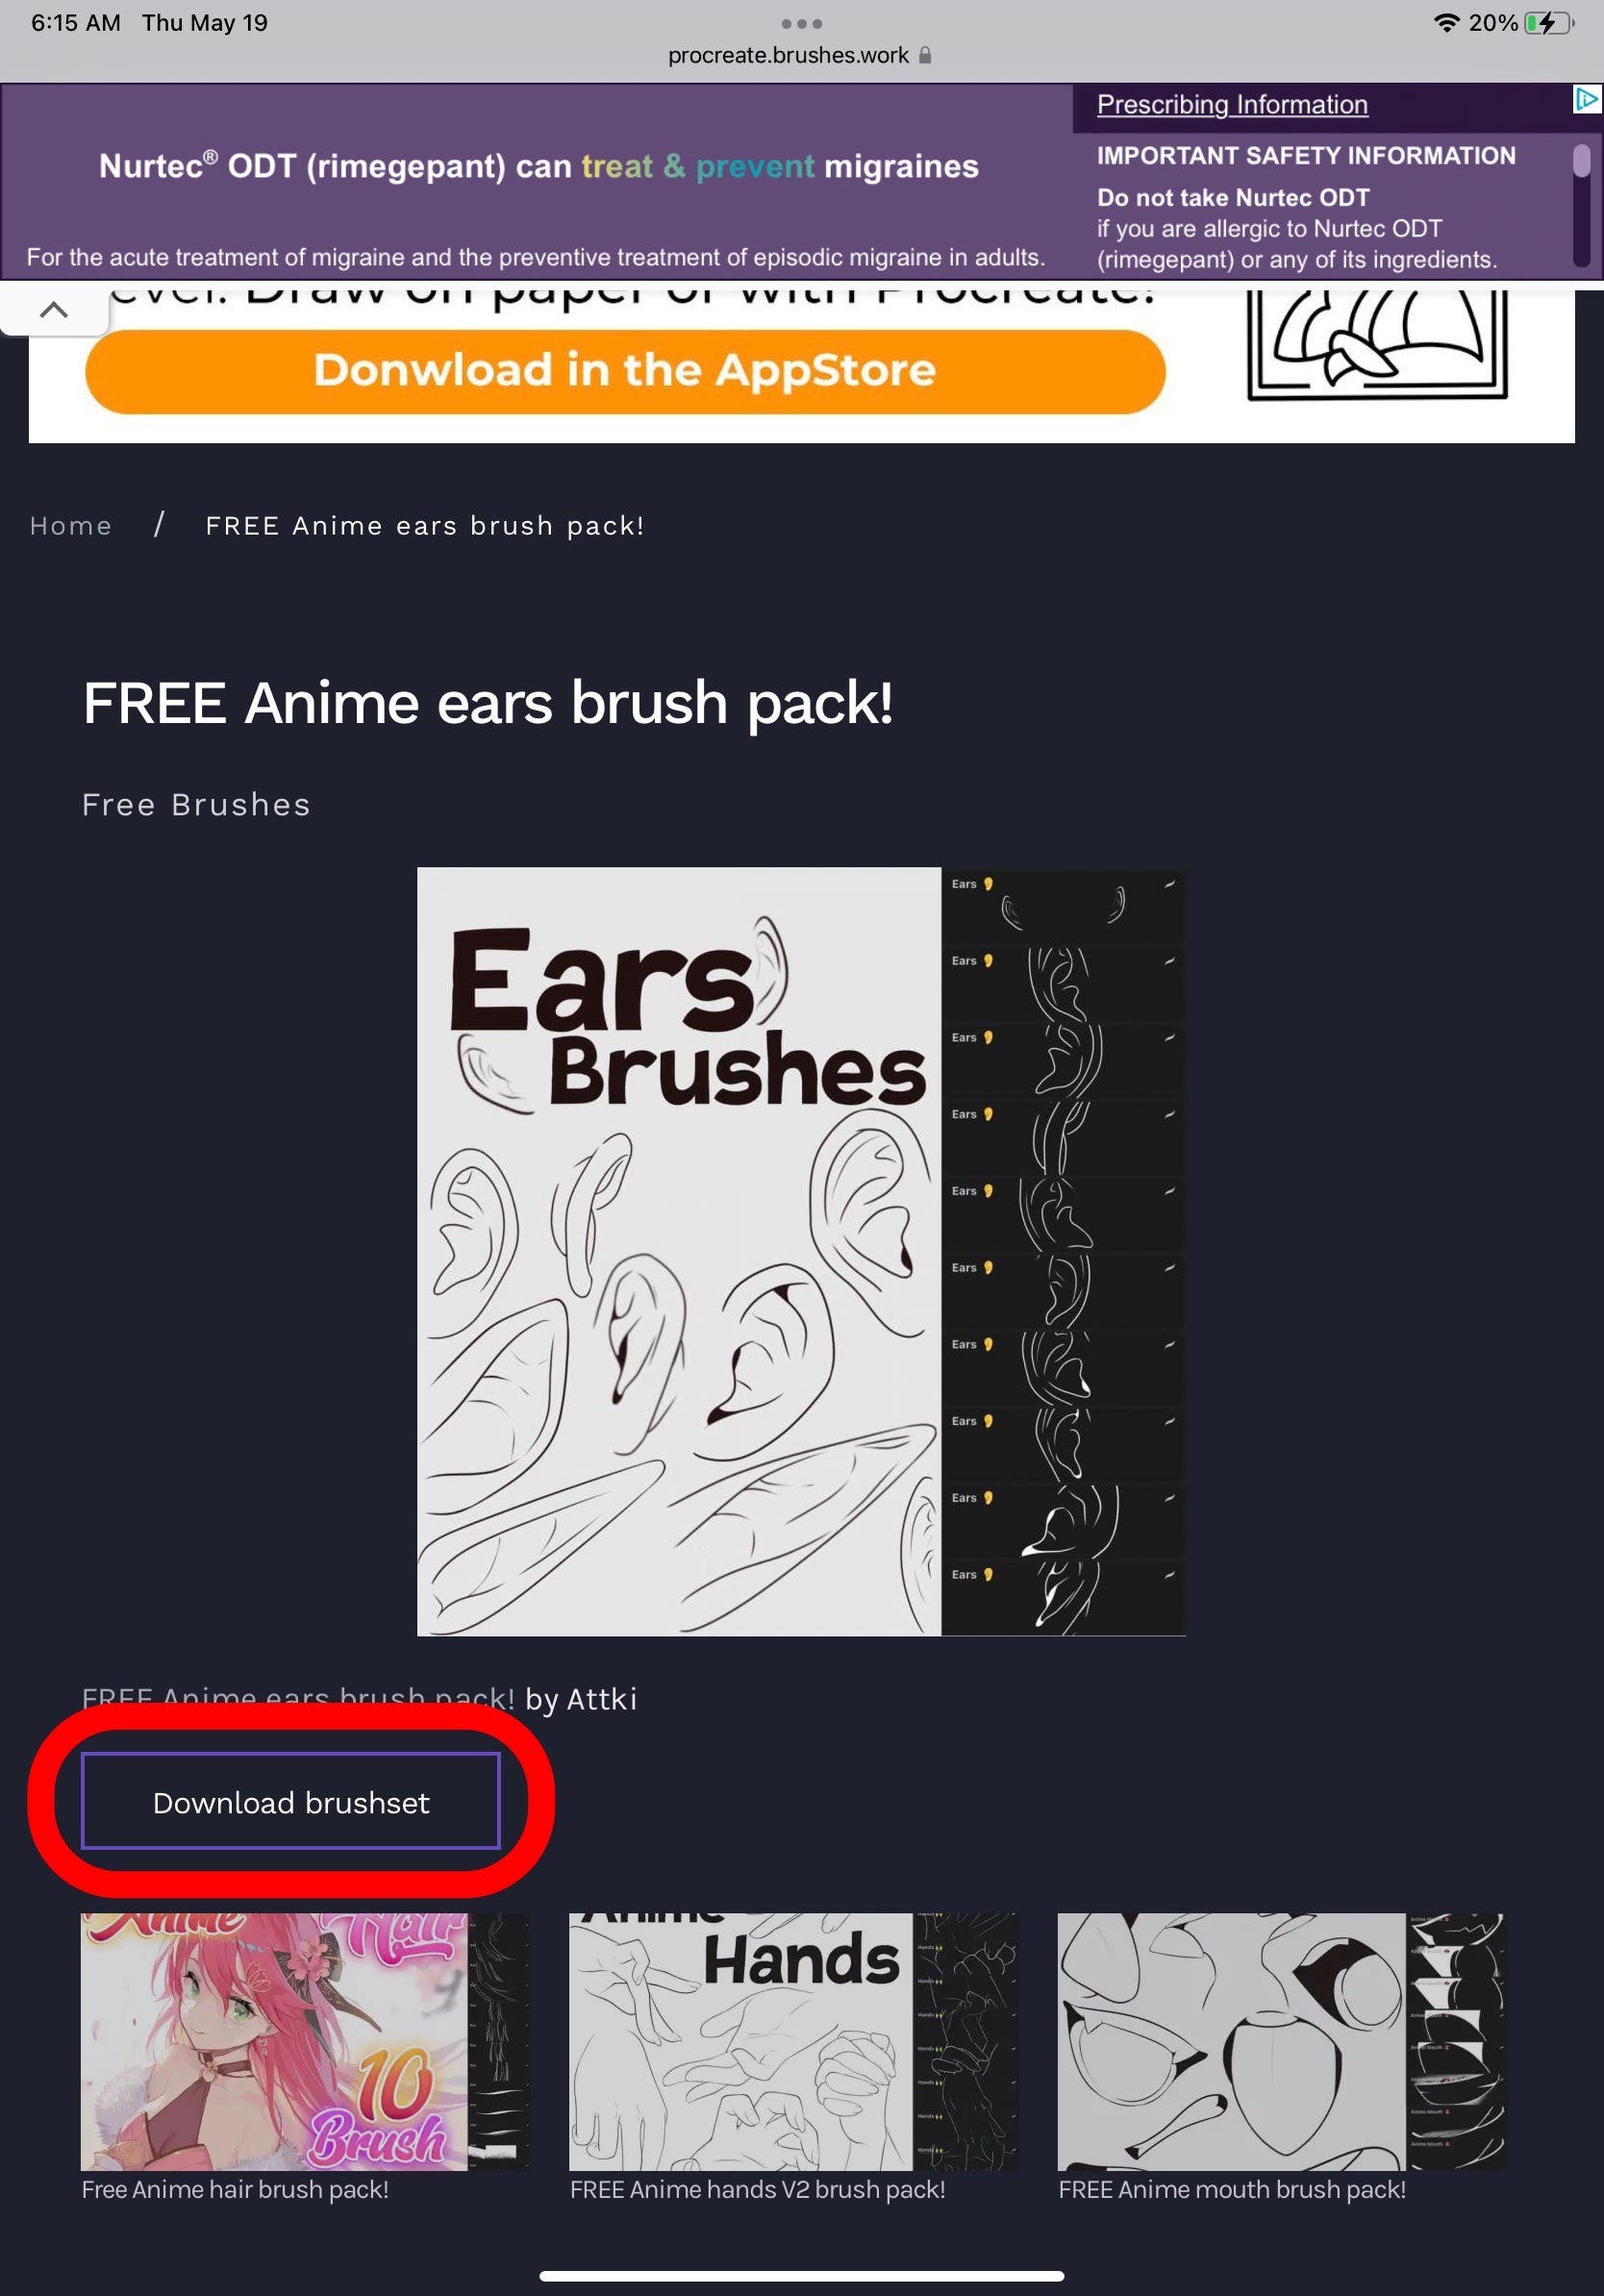 Free Anime hair brush pack for procreate